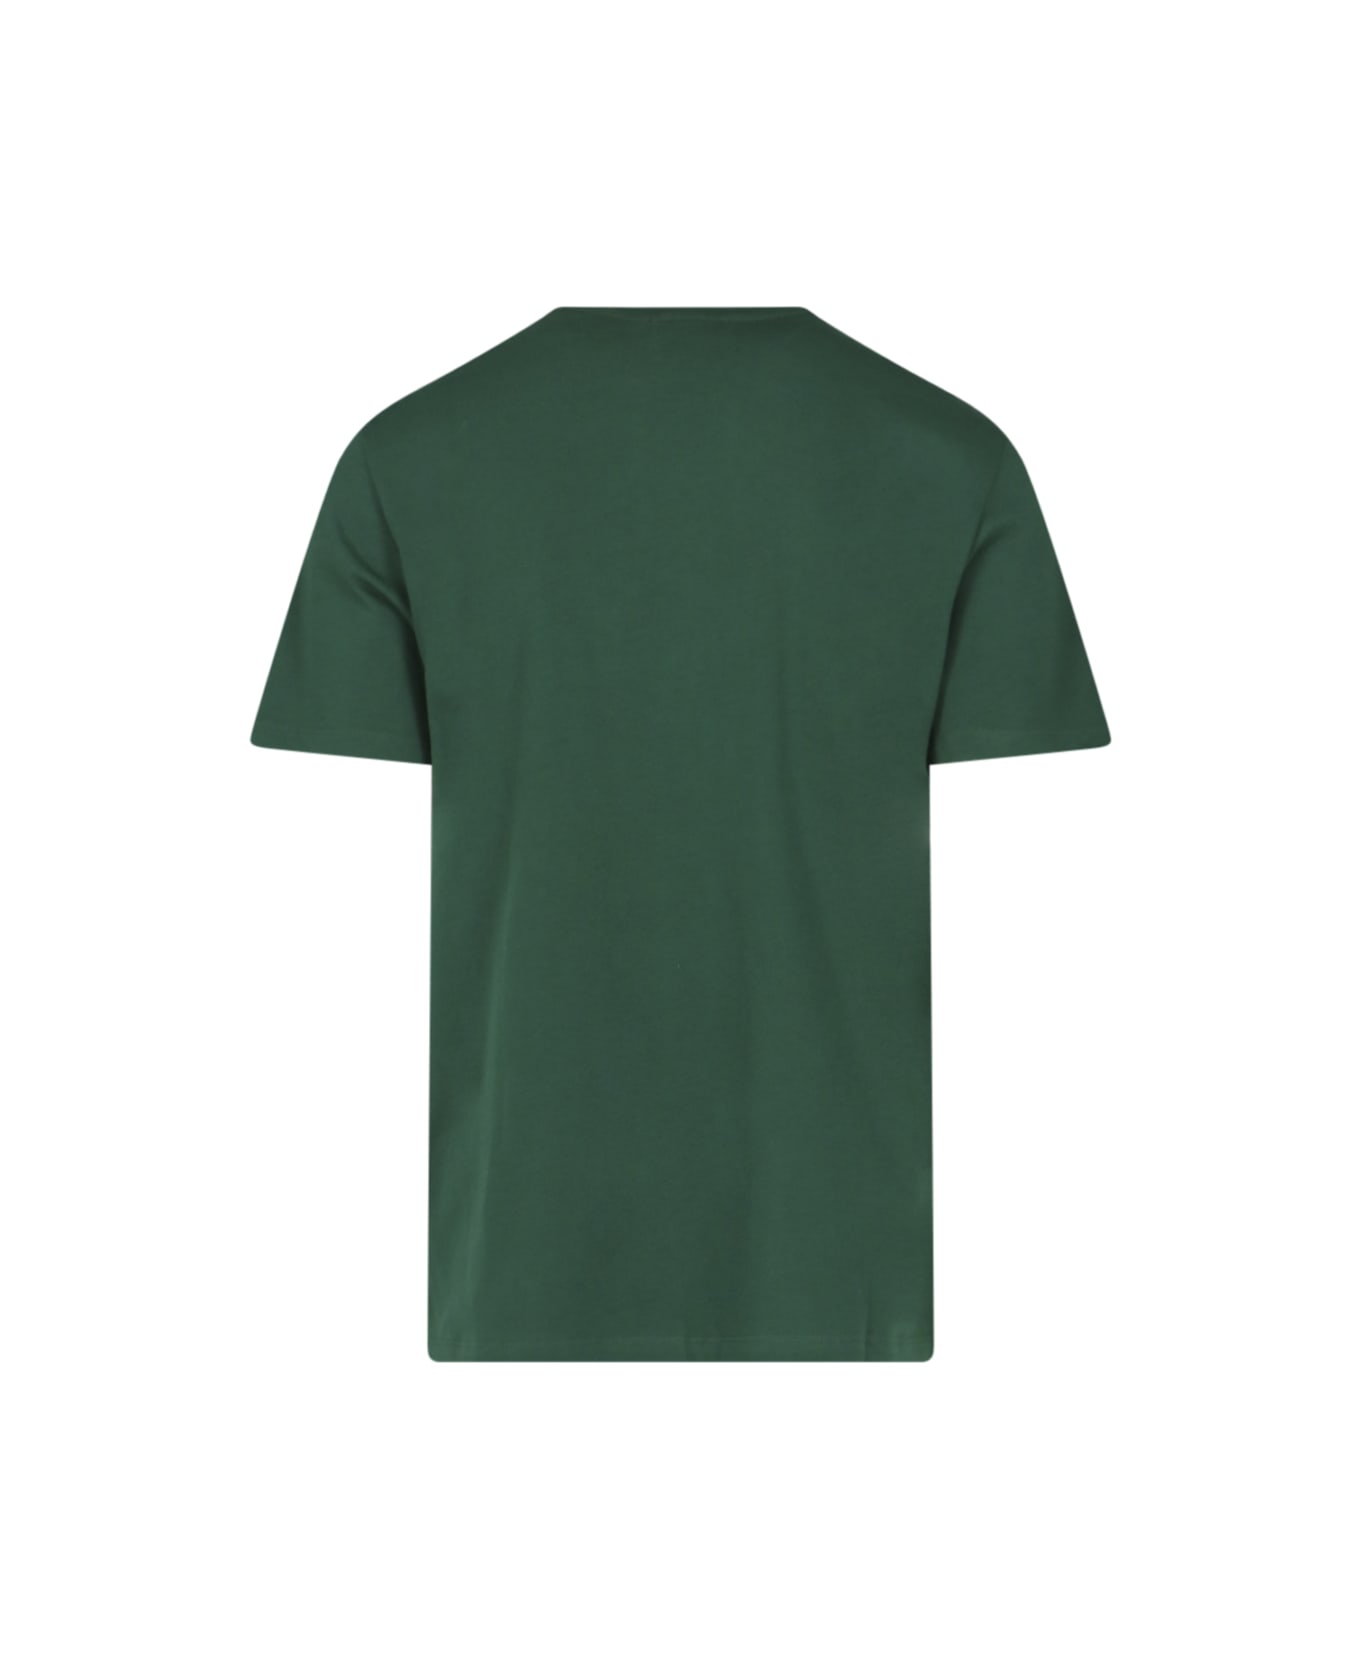 A.P.C. Madame Cotton Crew-neck T-shirt - green